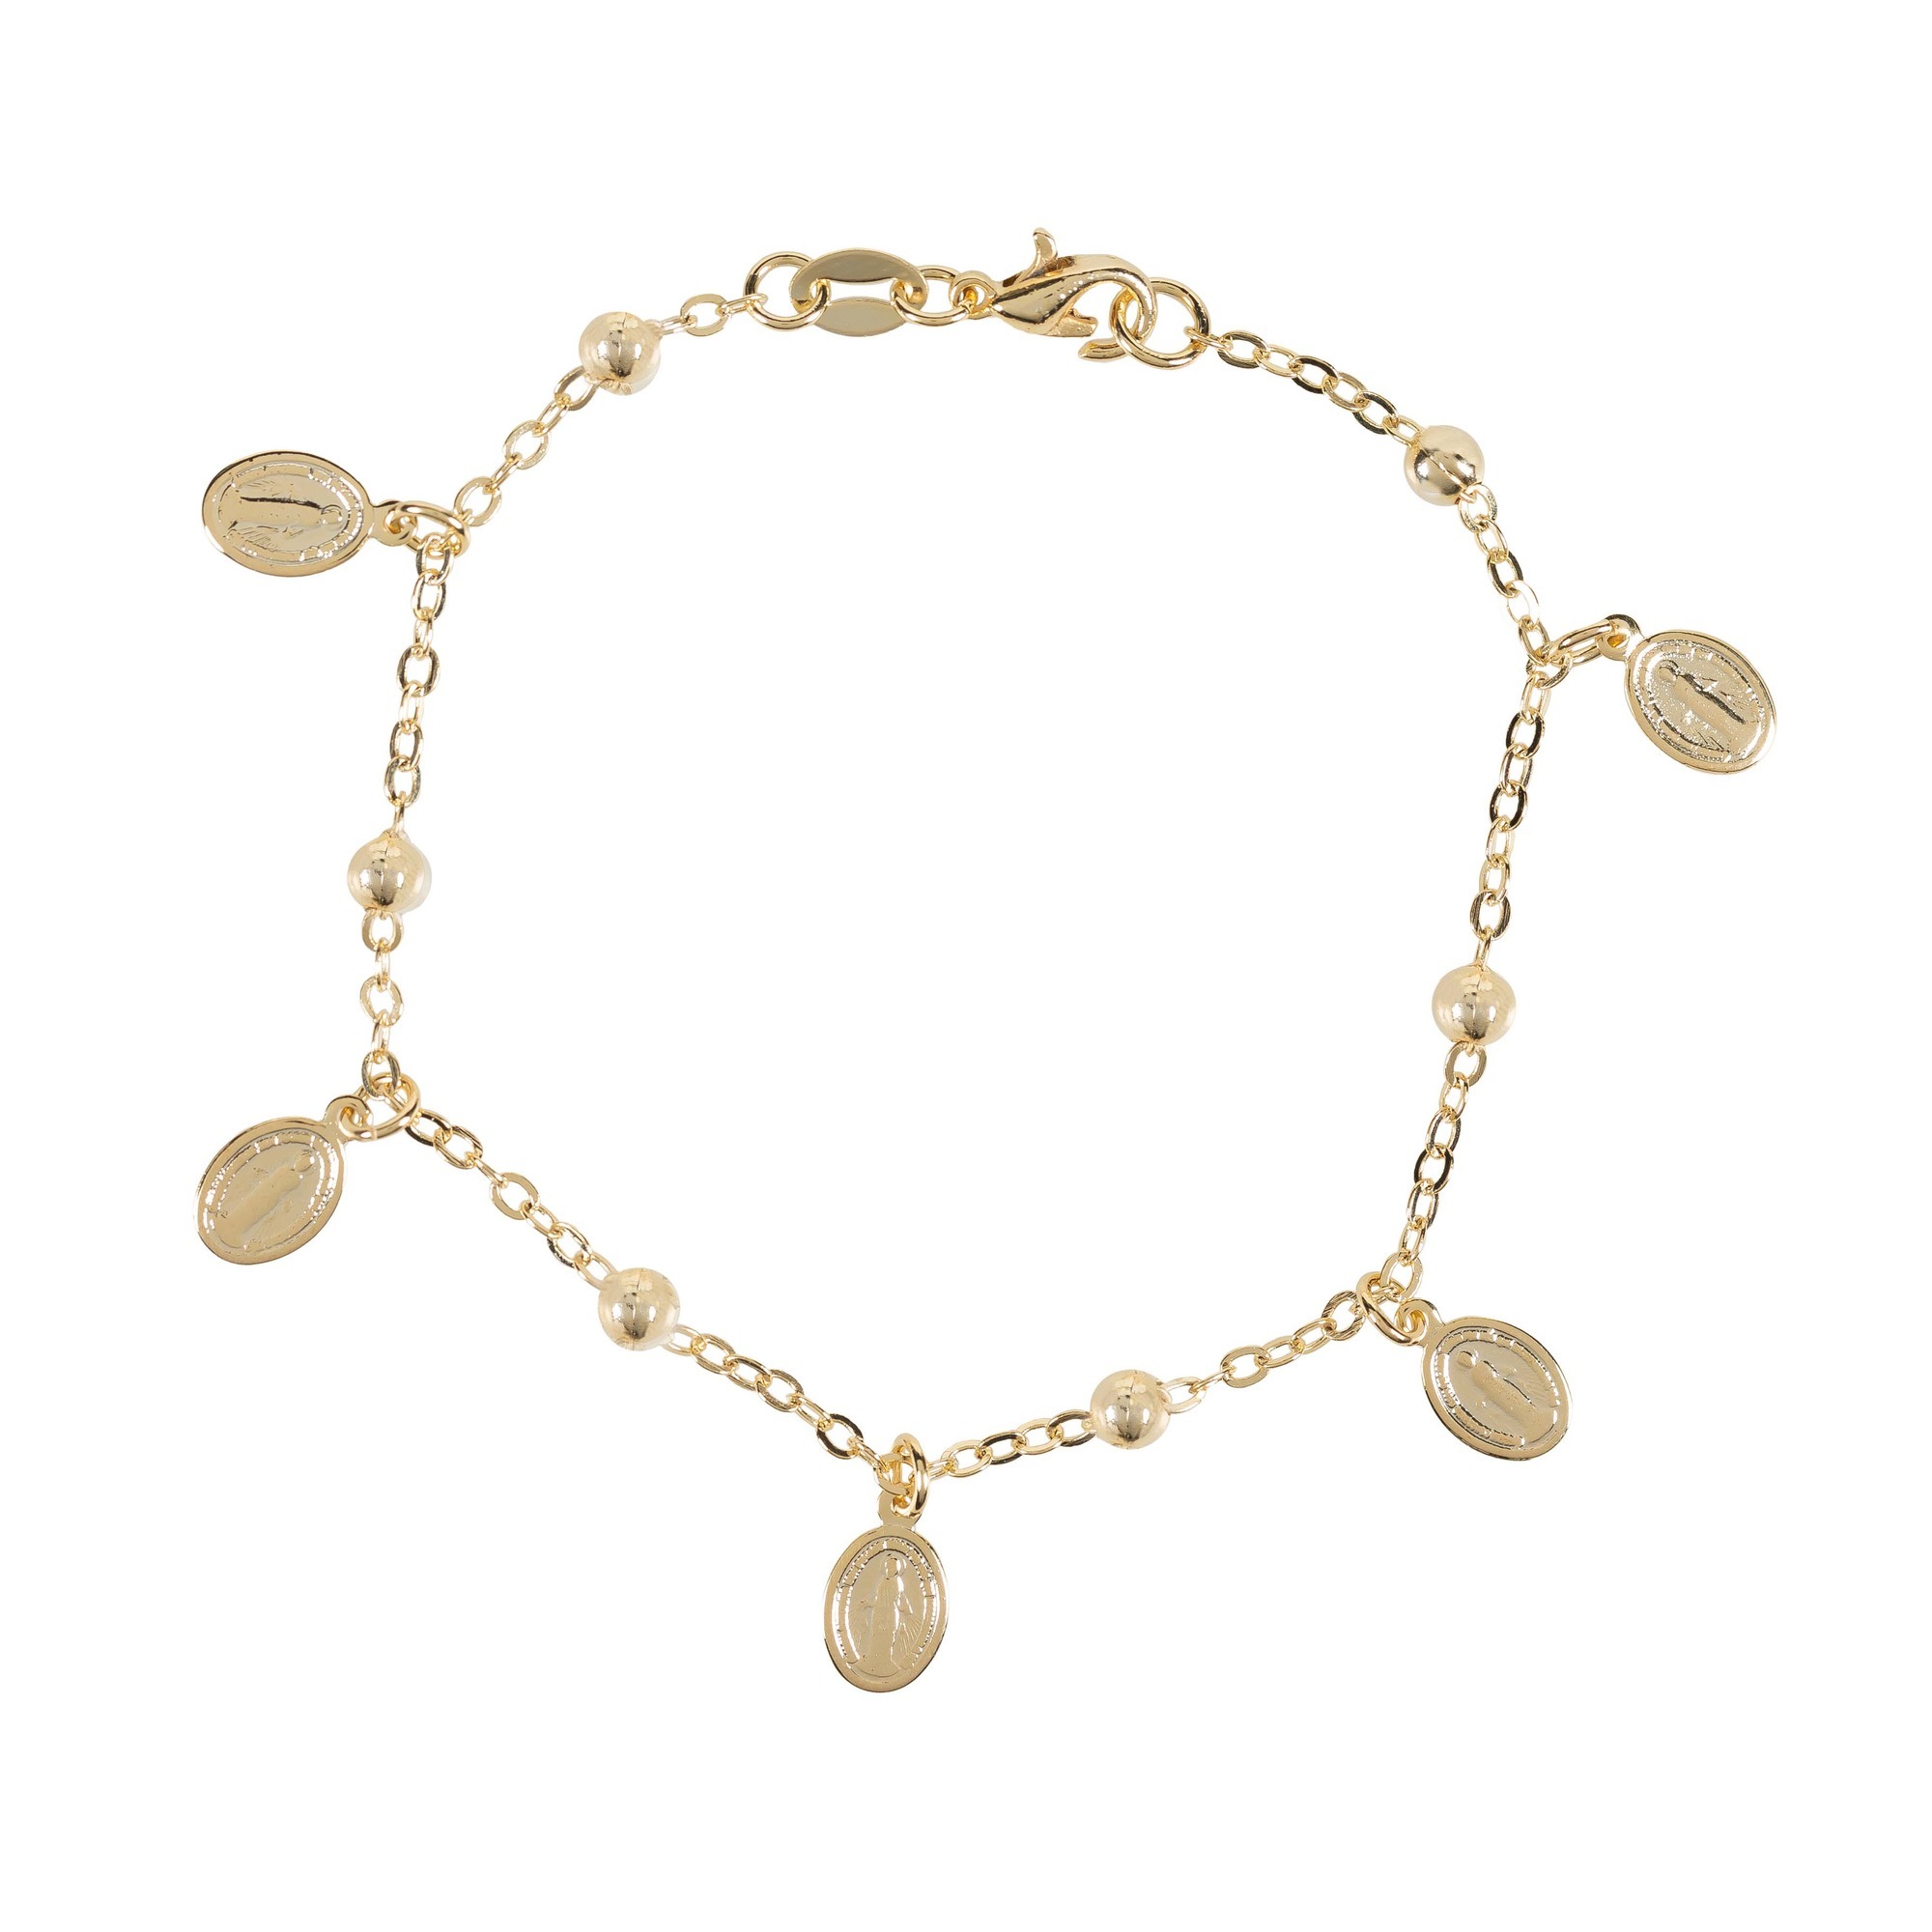 Our Lady of Grace Beaded Charm Bracelet - Gold | The Catholic Company®